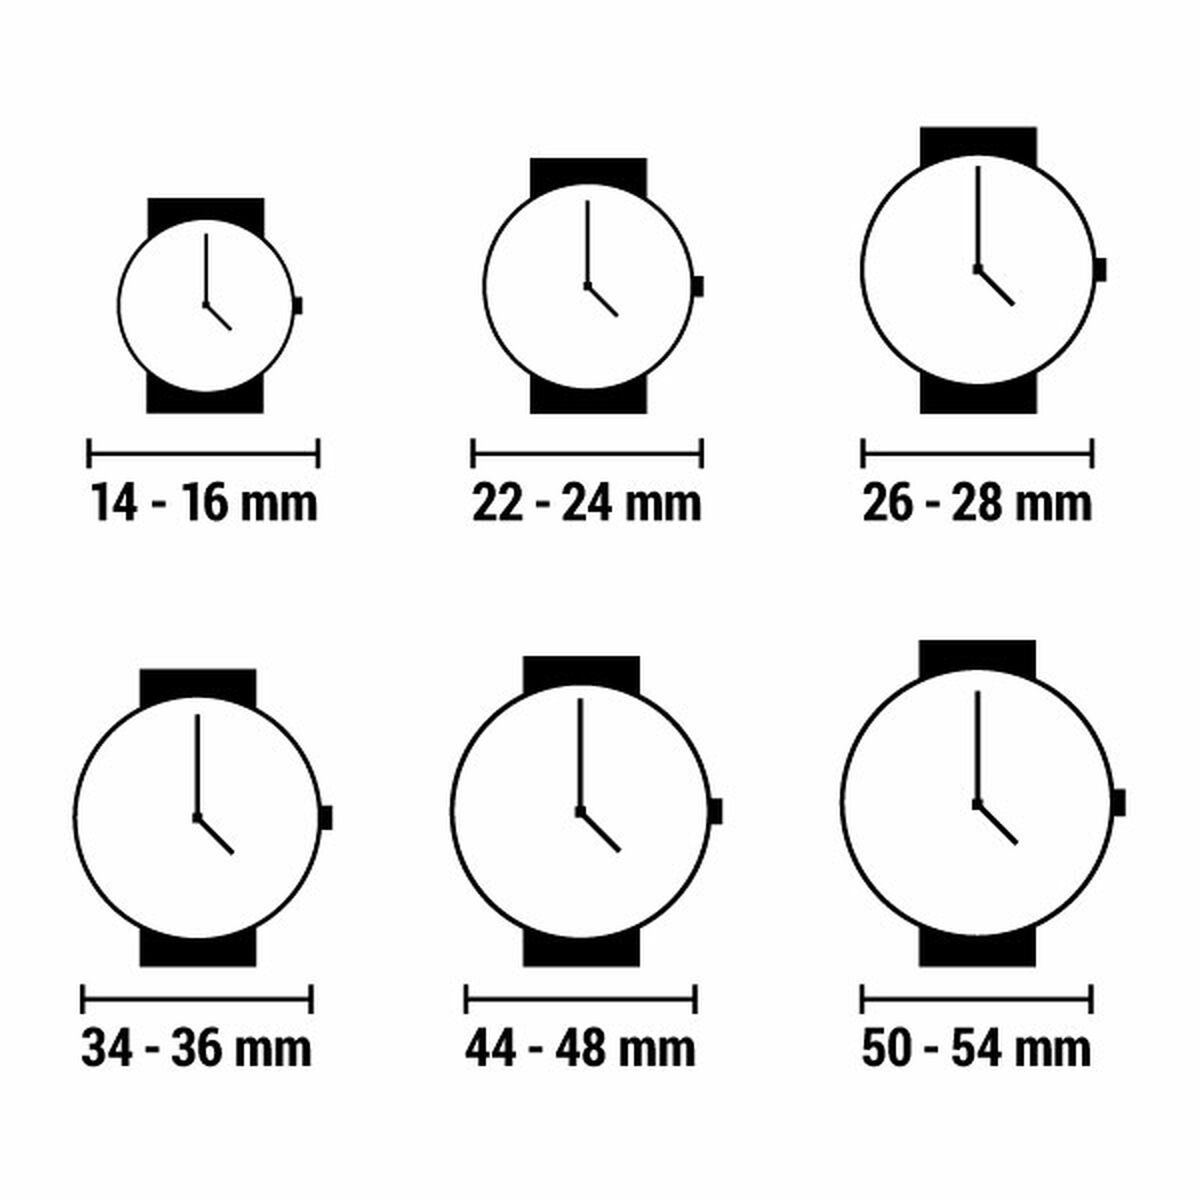 Horloge Dames Juicy Couture JC1240CHGP (Ø 38 mm)